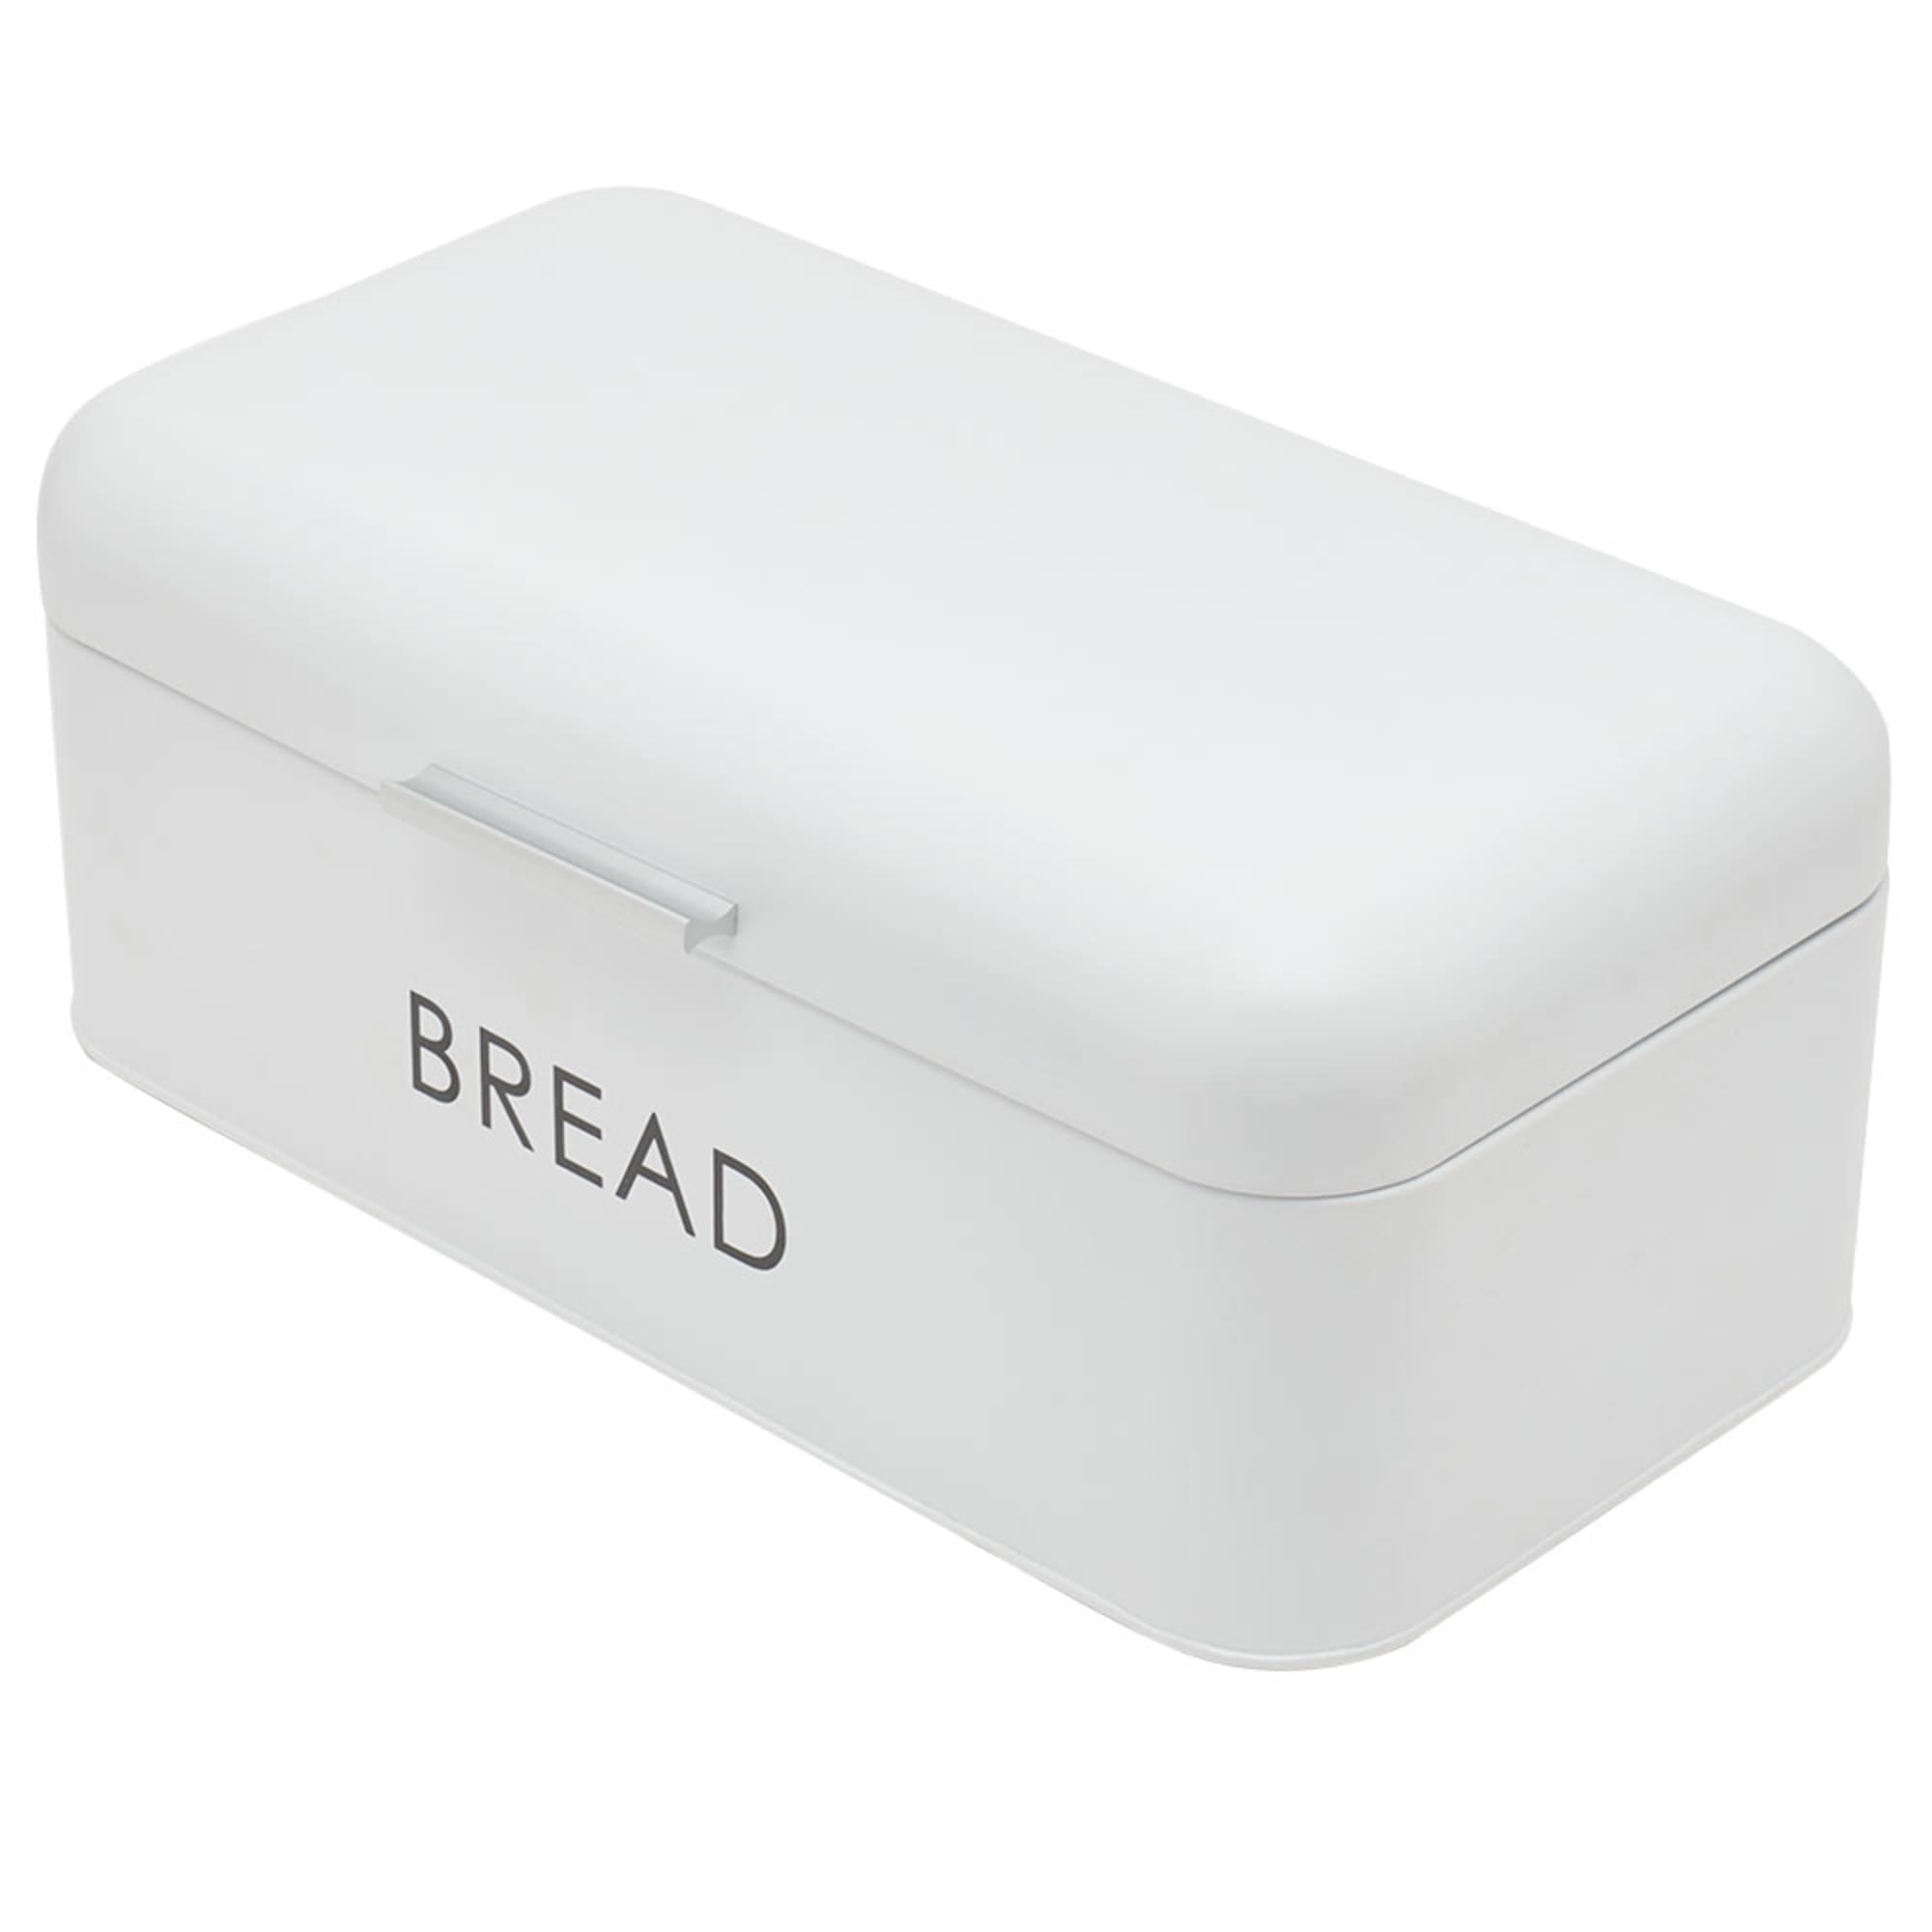 Home Basics Apex Metal Bread Box, White $25.00 EACH, CASE PACK OF 4